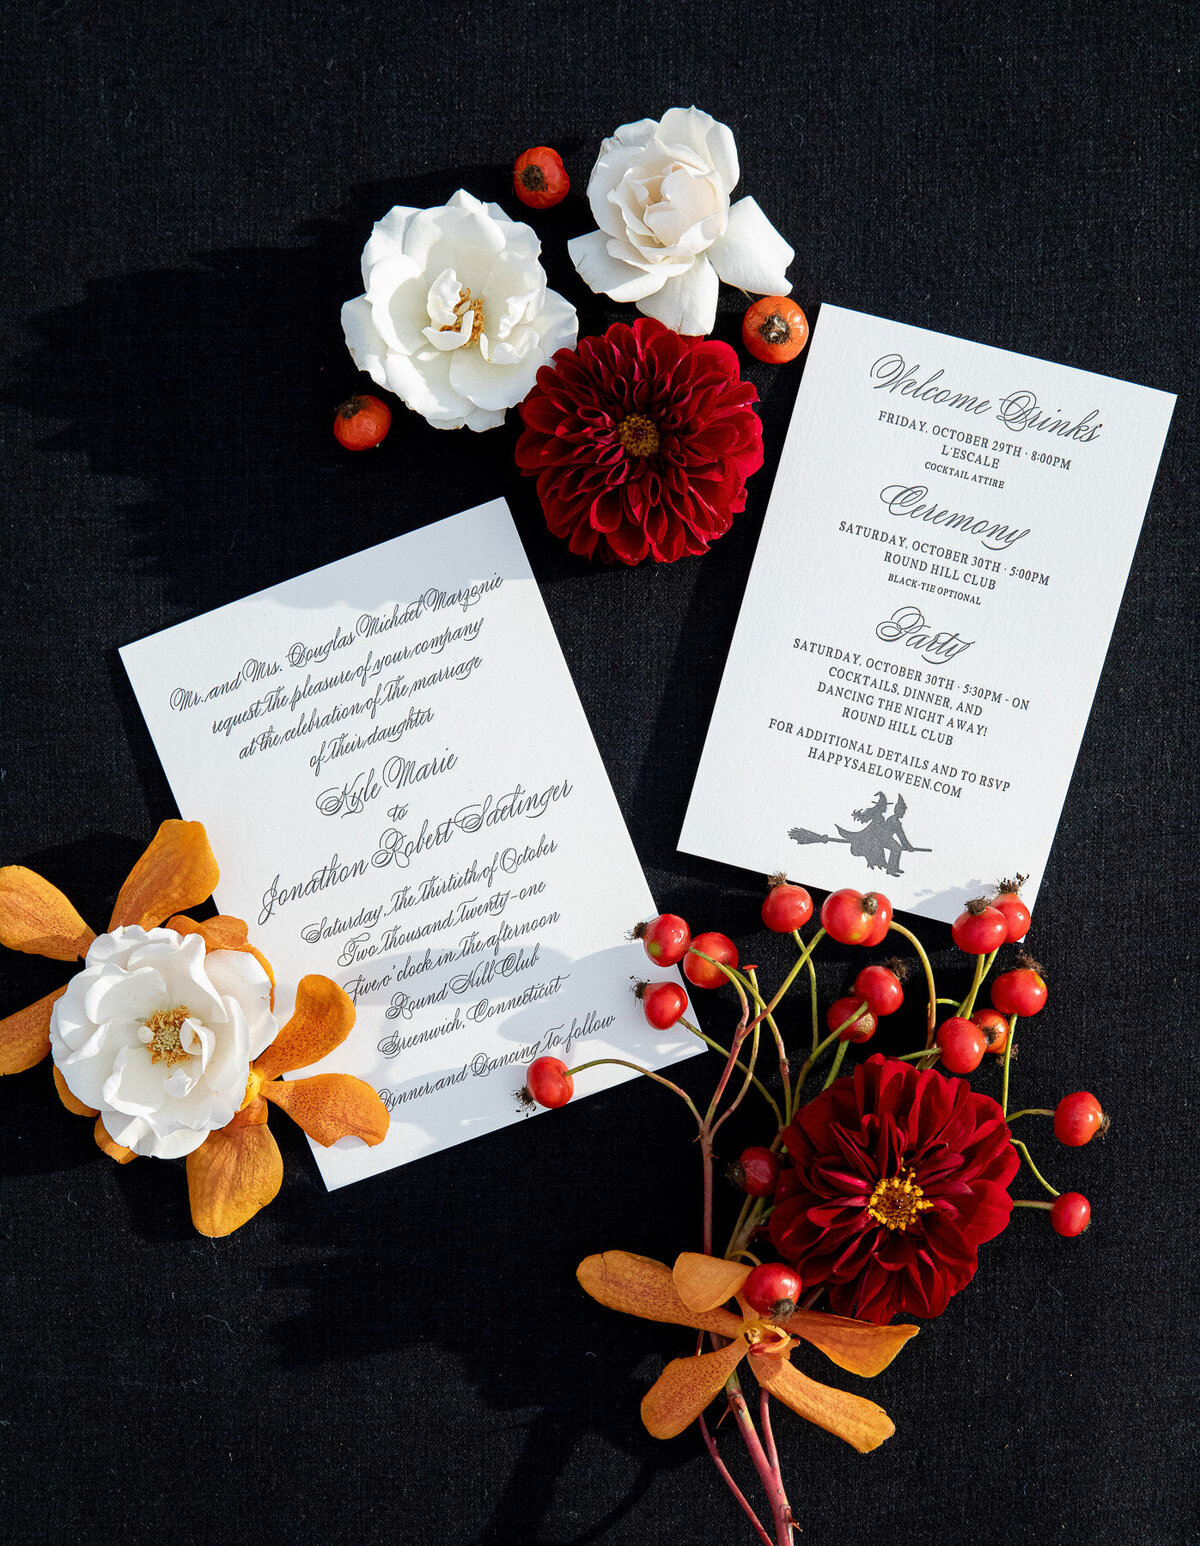 Wedding invitations with a Halloween theme